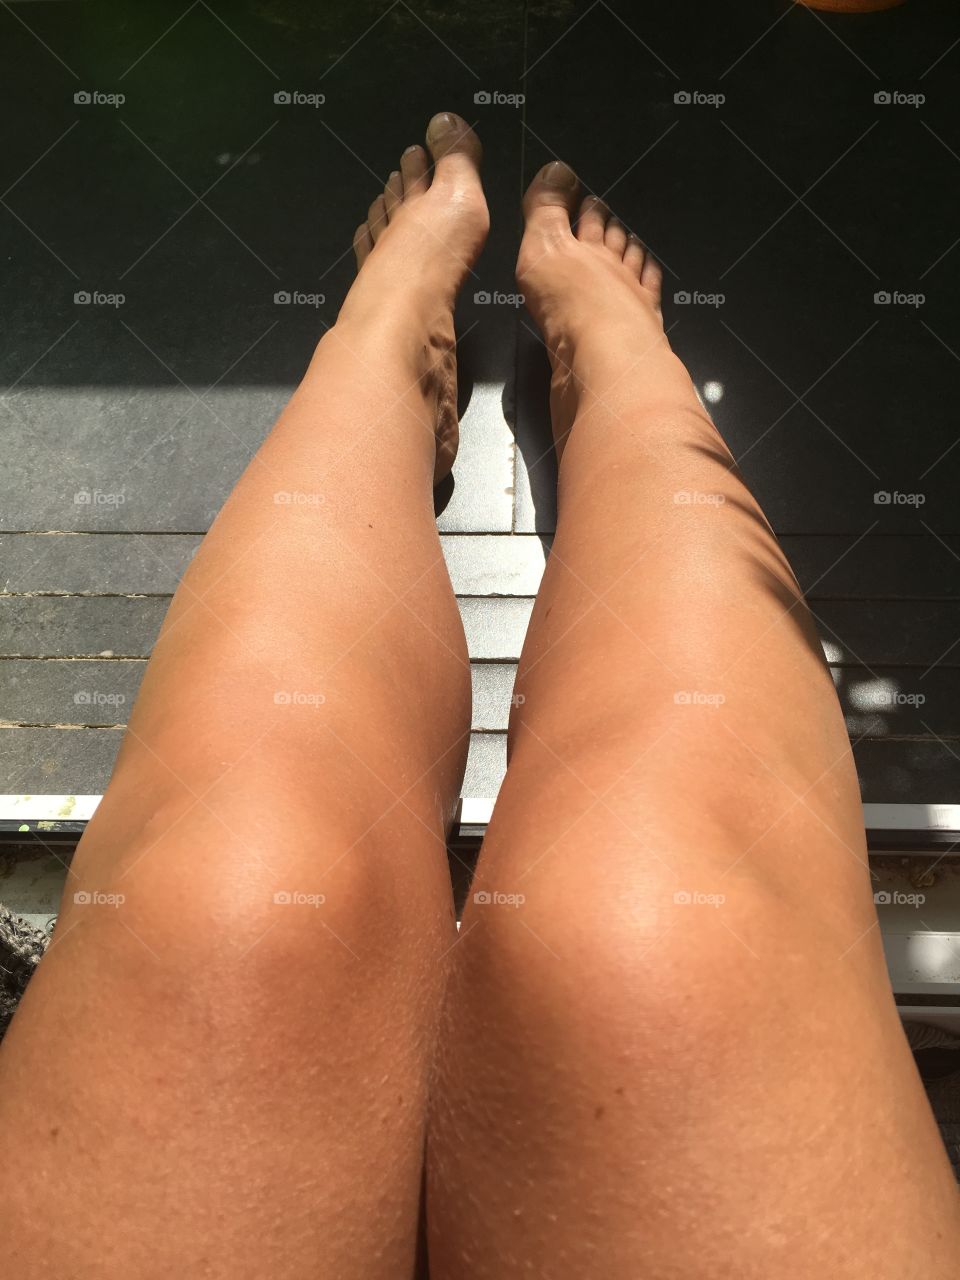 Sun bath legs balcony 